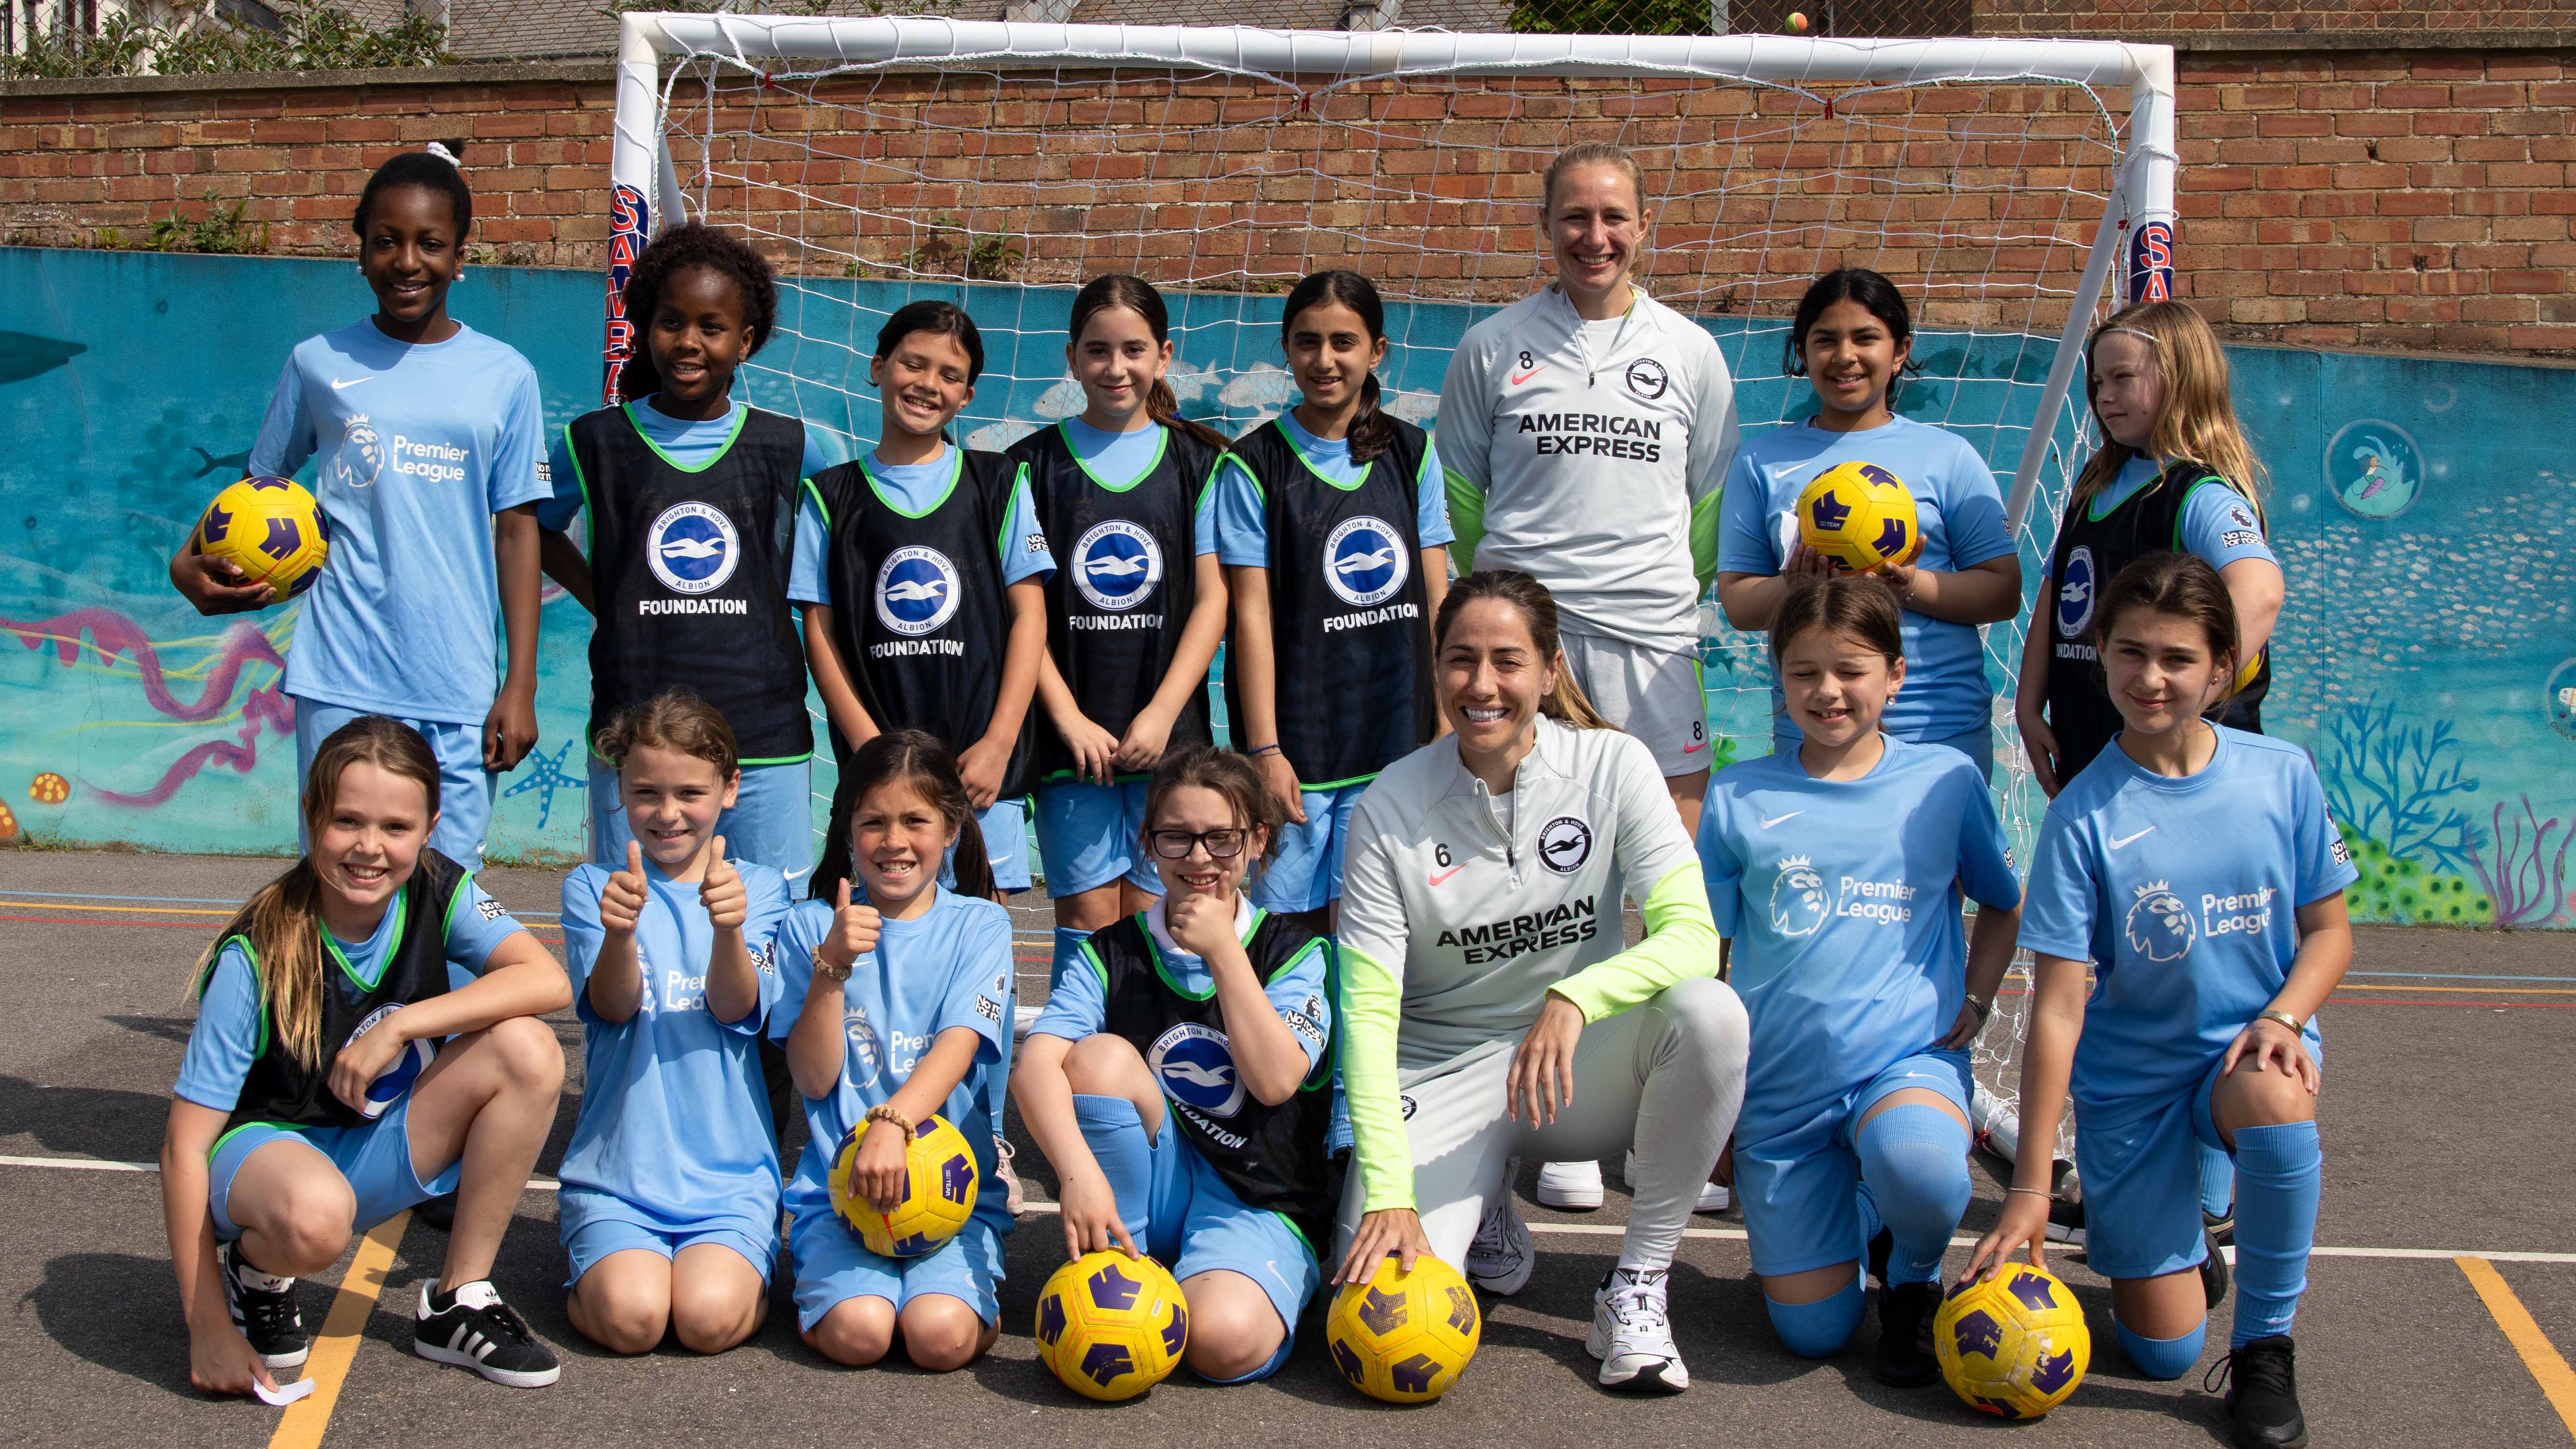 Brighton girls after-school club get surprise Albion visit